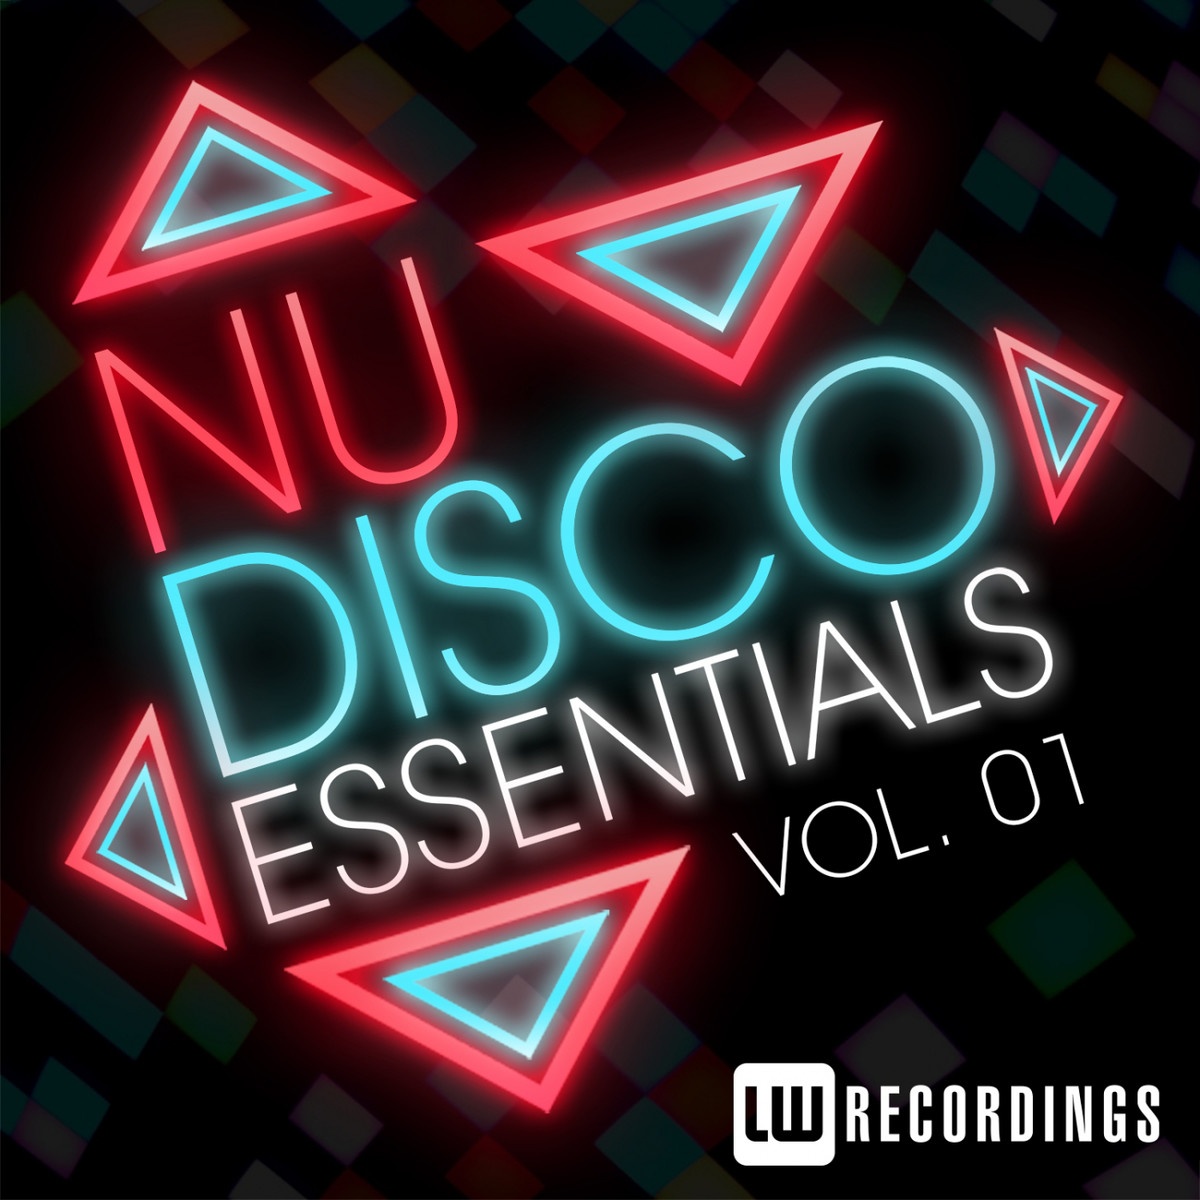 Nu-Disco Essentials Vol. 01